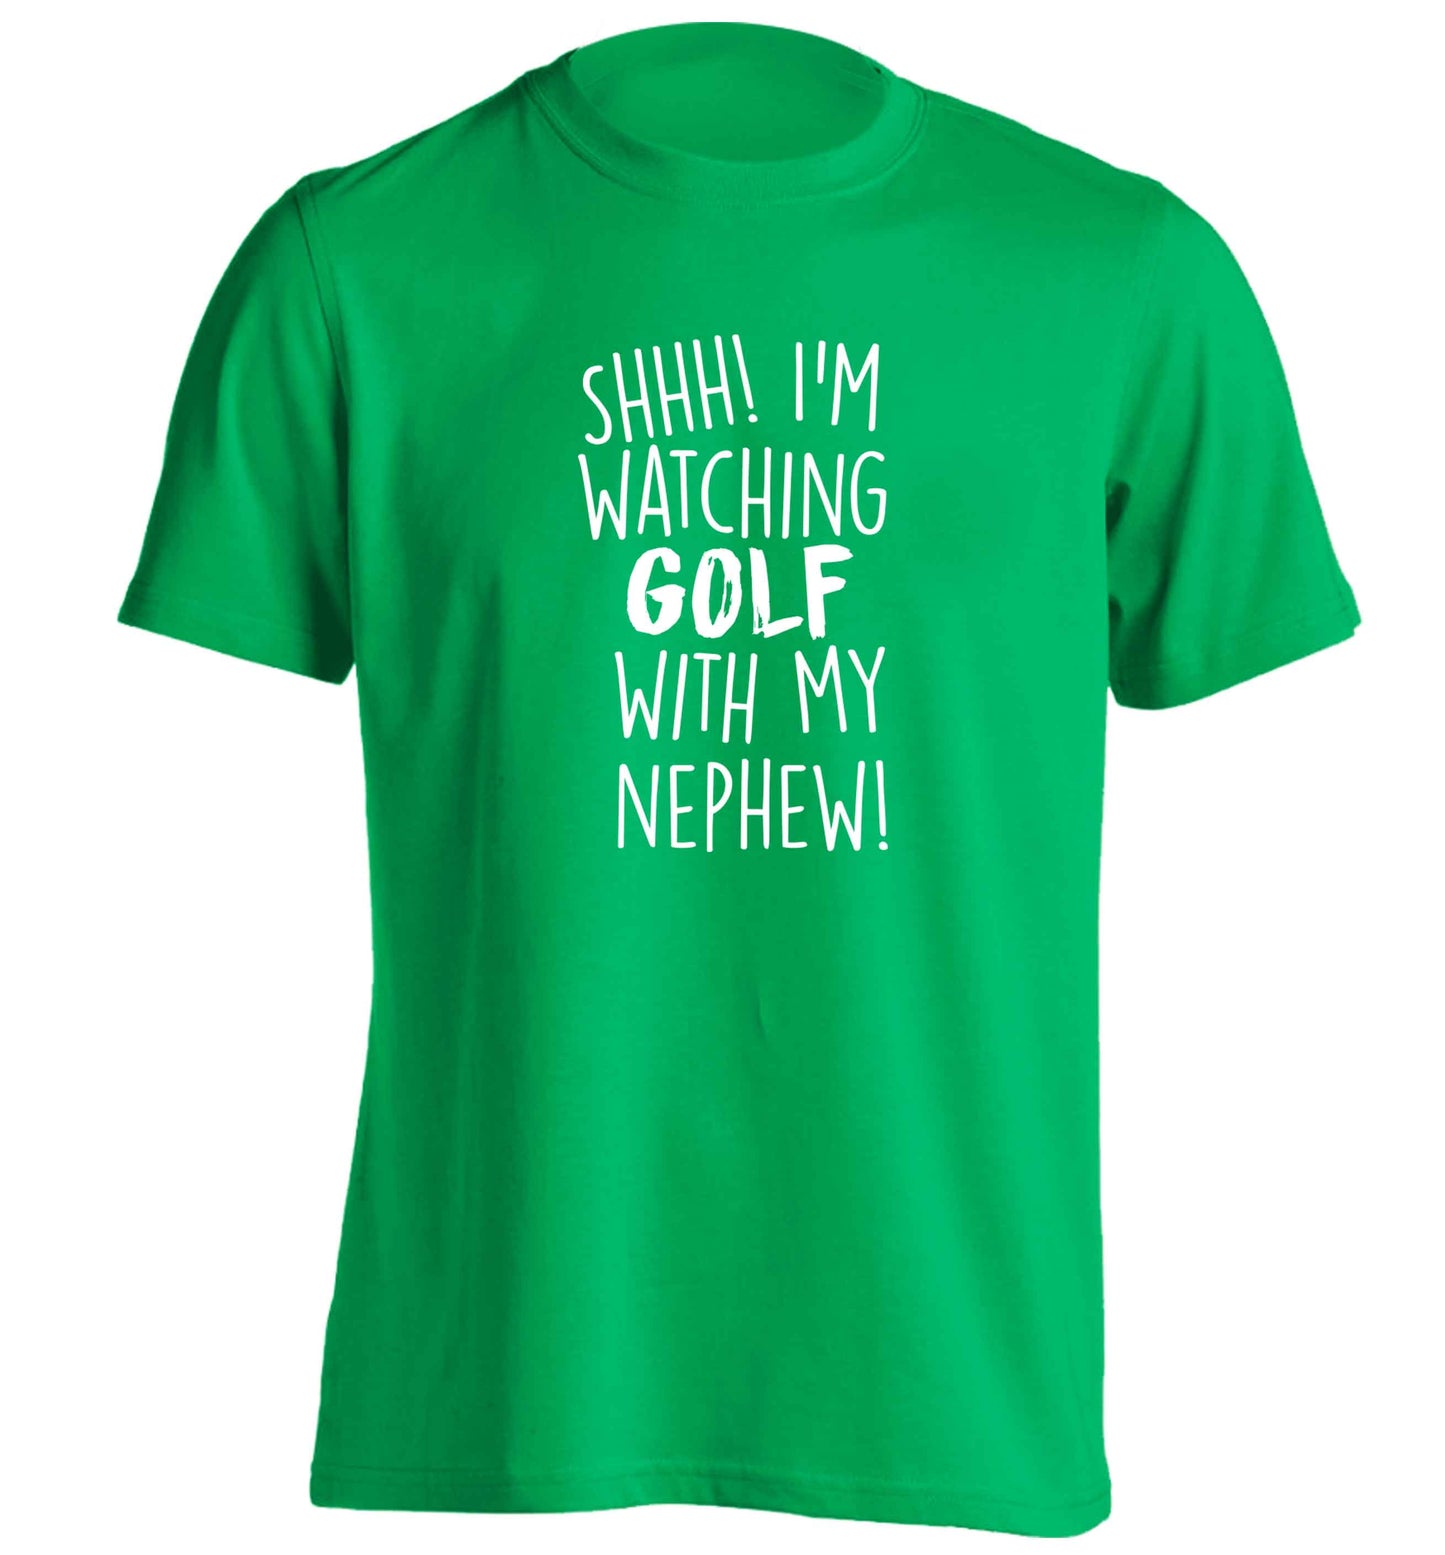 Shh I'm watching golf with my nephew adults unisex green Tshirt 2XL